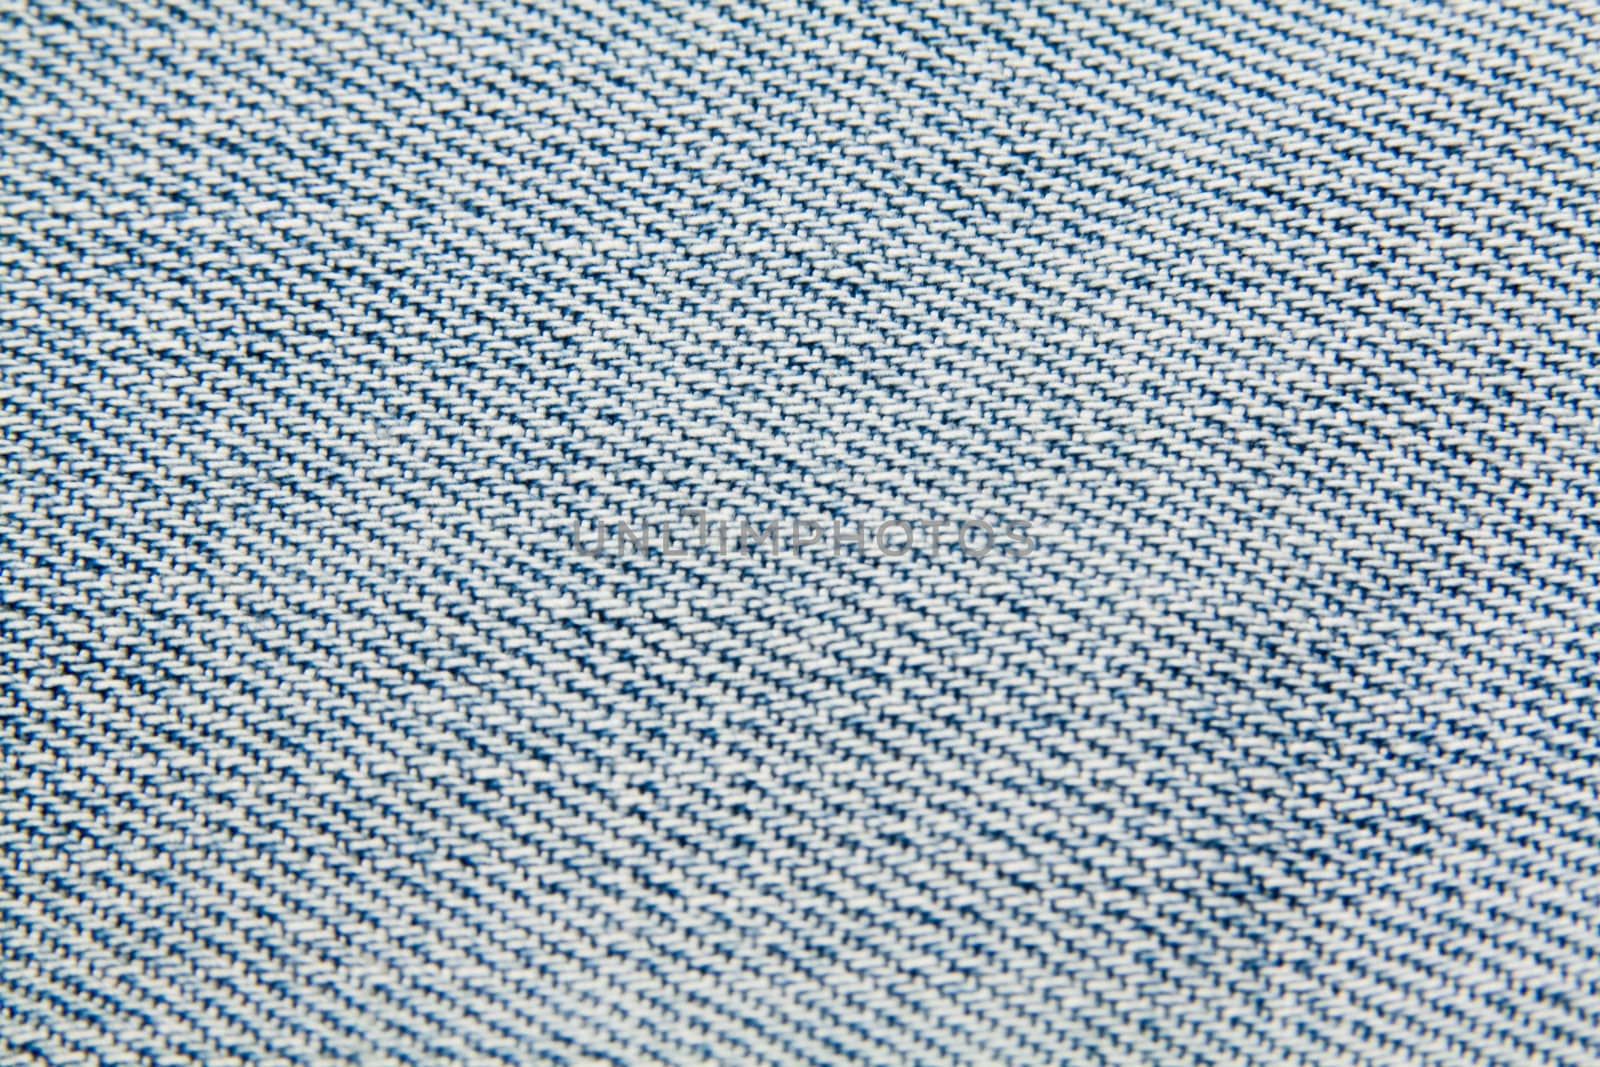 Denim, blue jean material by smoki